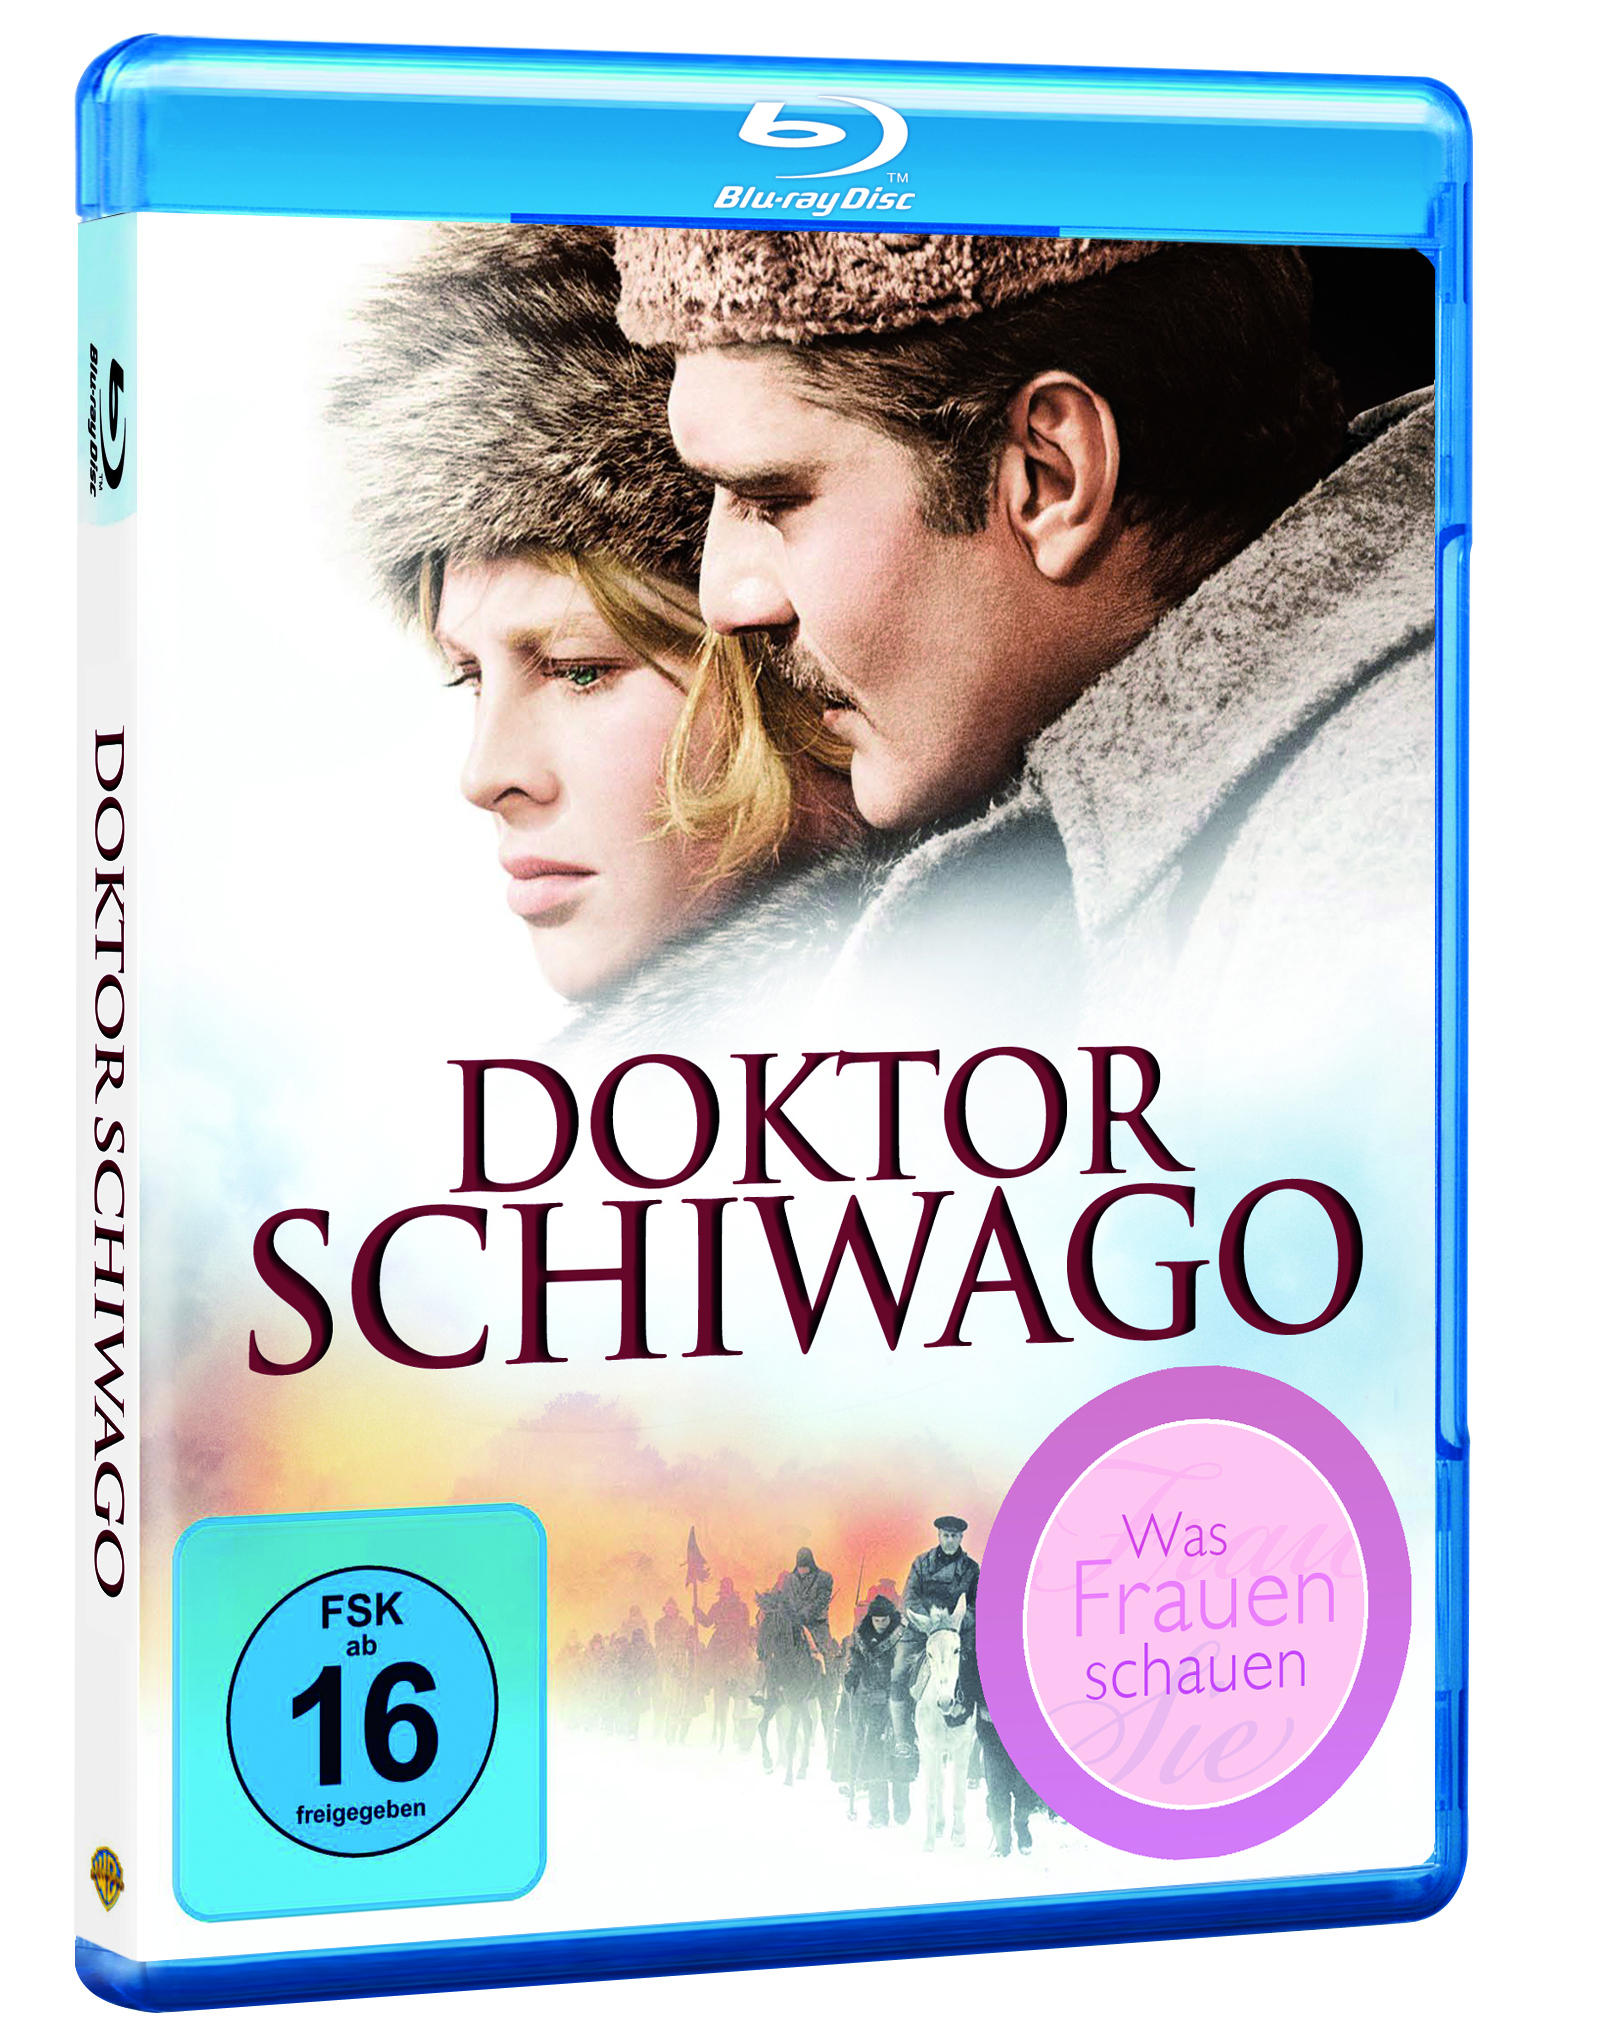 Schiwago Doktor Blu-ray